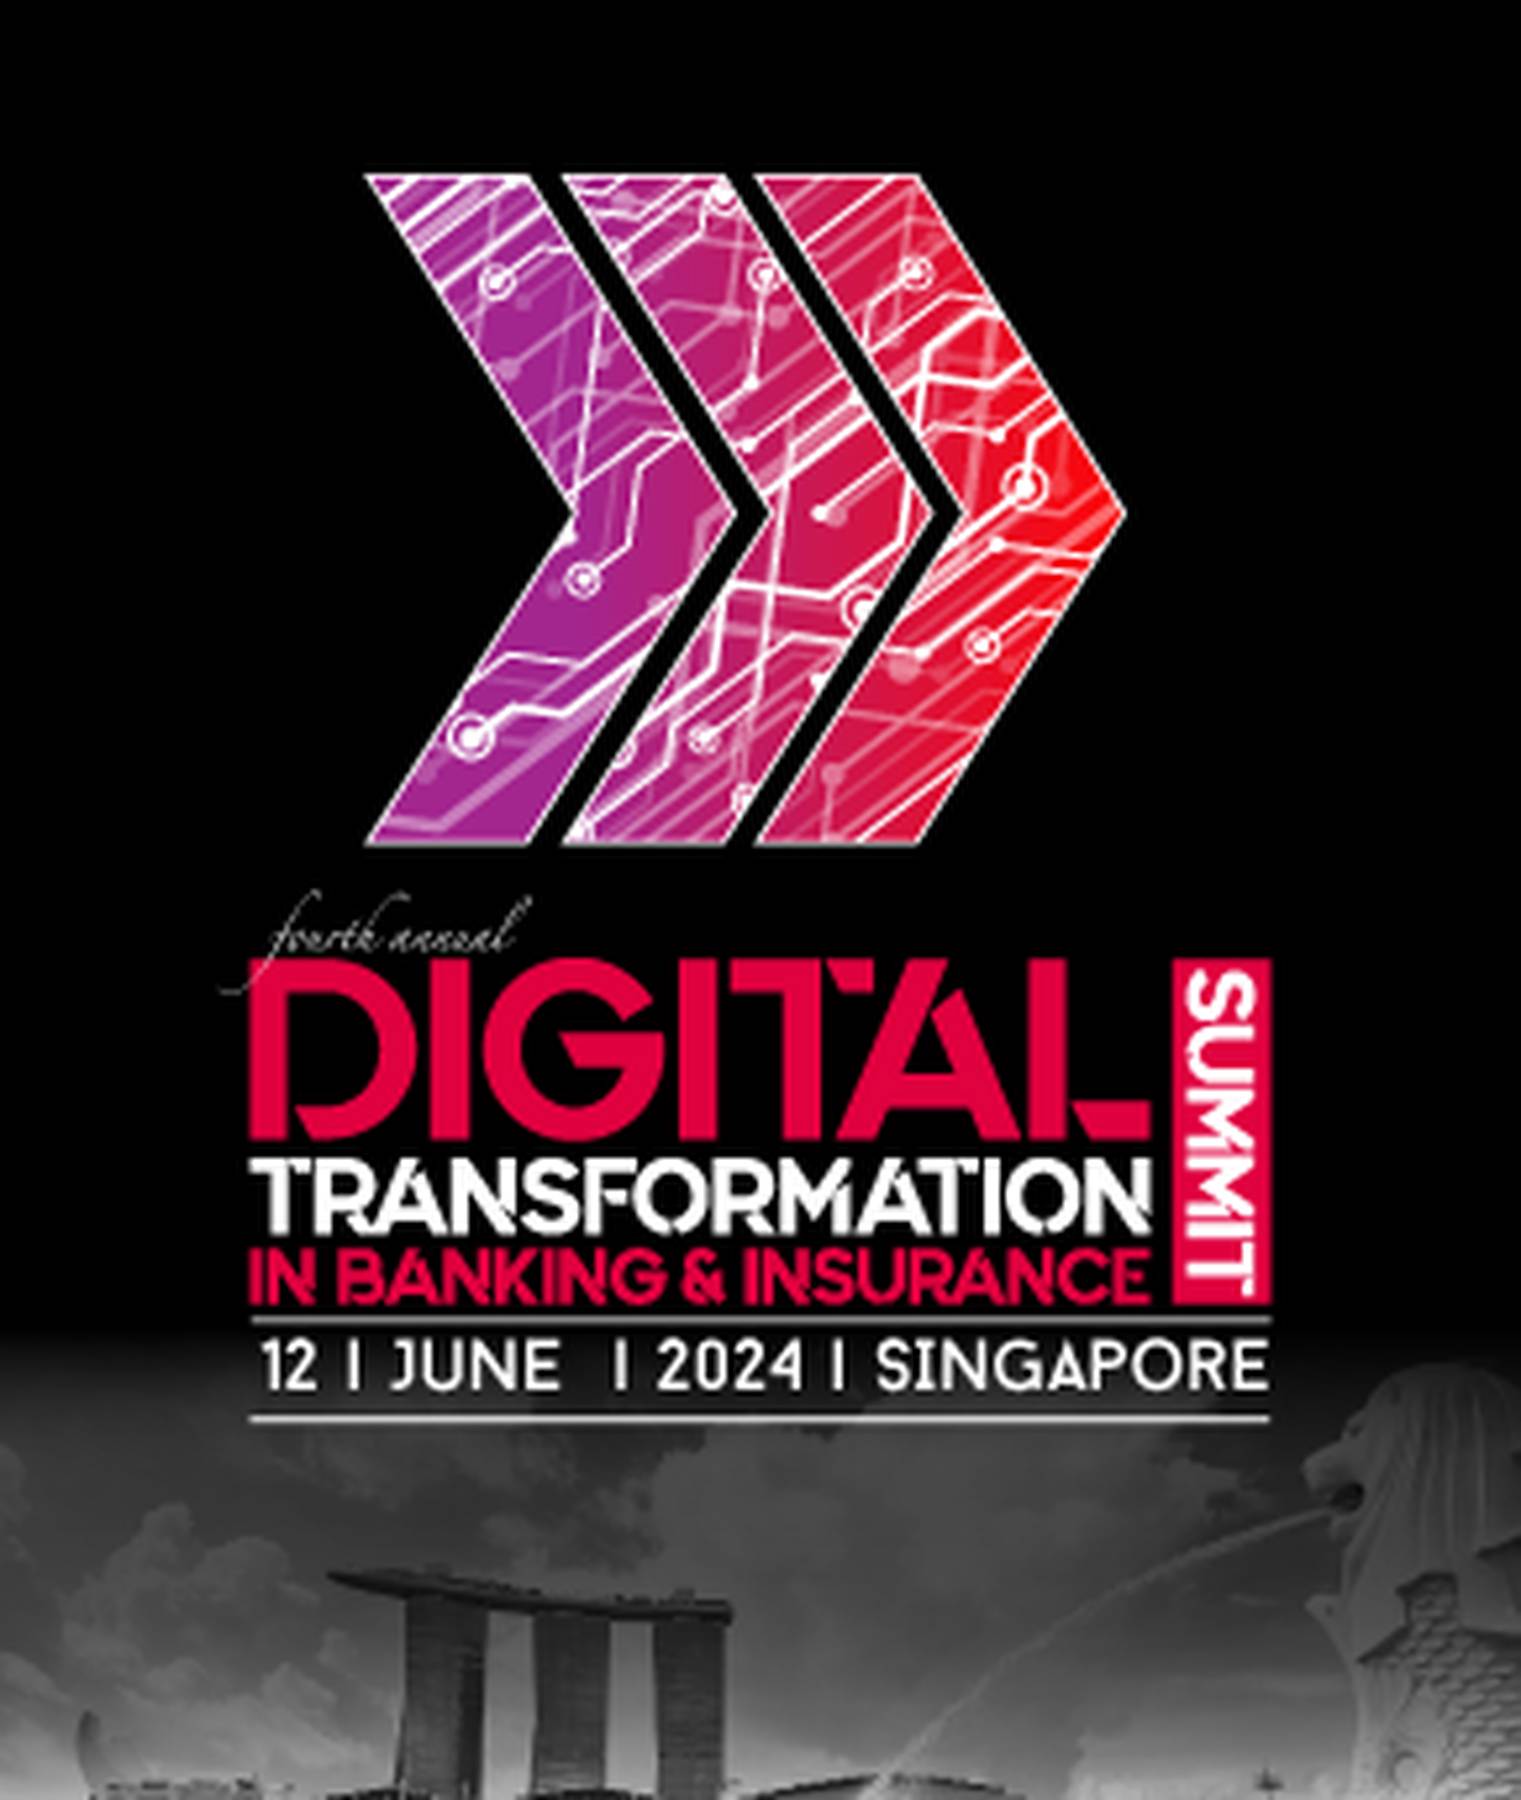 Digital transformation in banking & insurance summit Singapore 2024